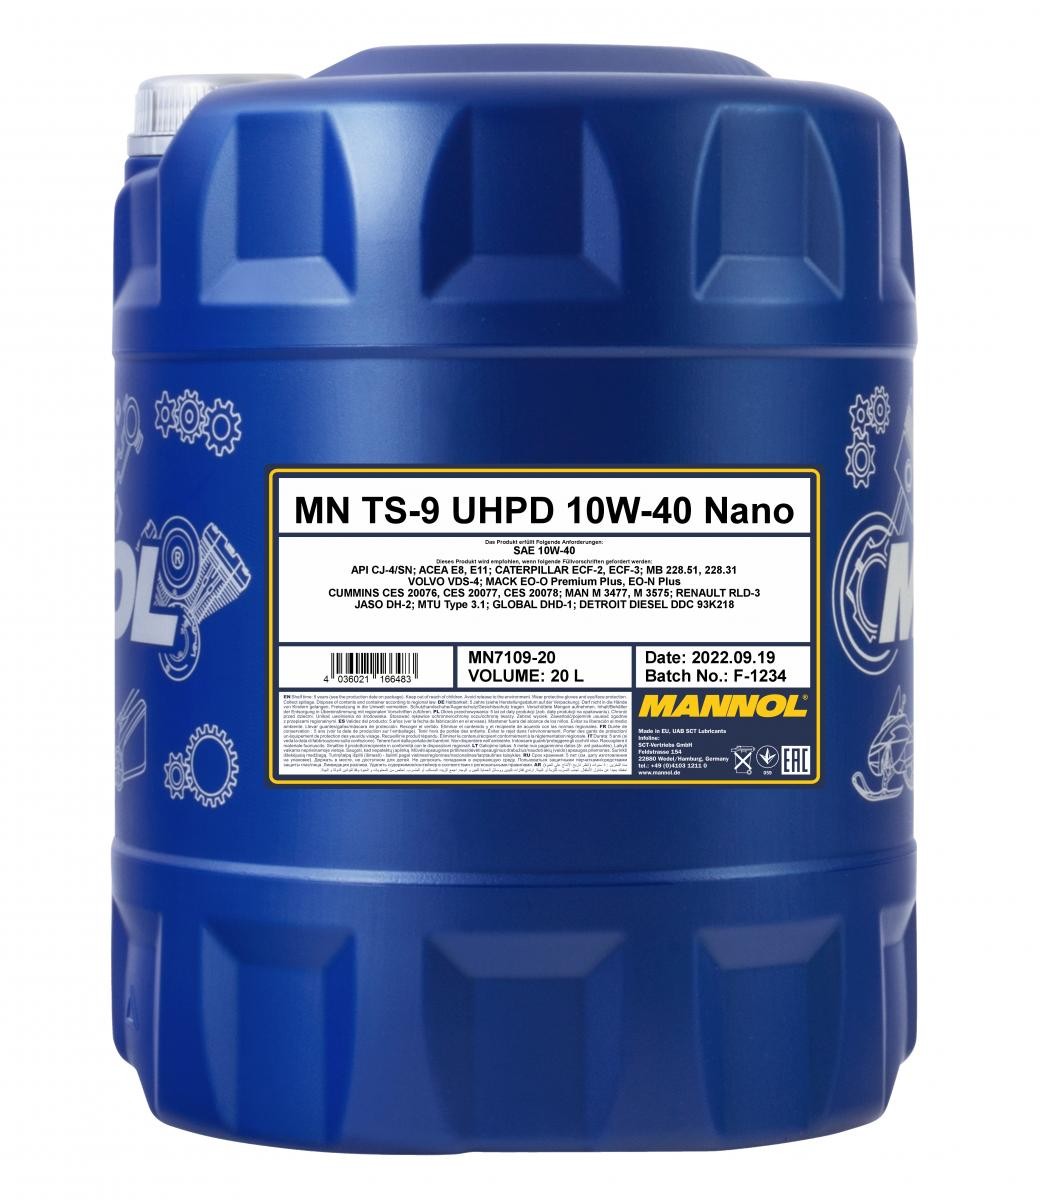 Aceite motor 10W-40 longlife diésel - MN7109-20 MANNOL TS-9, UHPD Nano